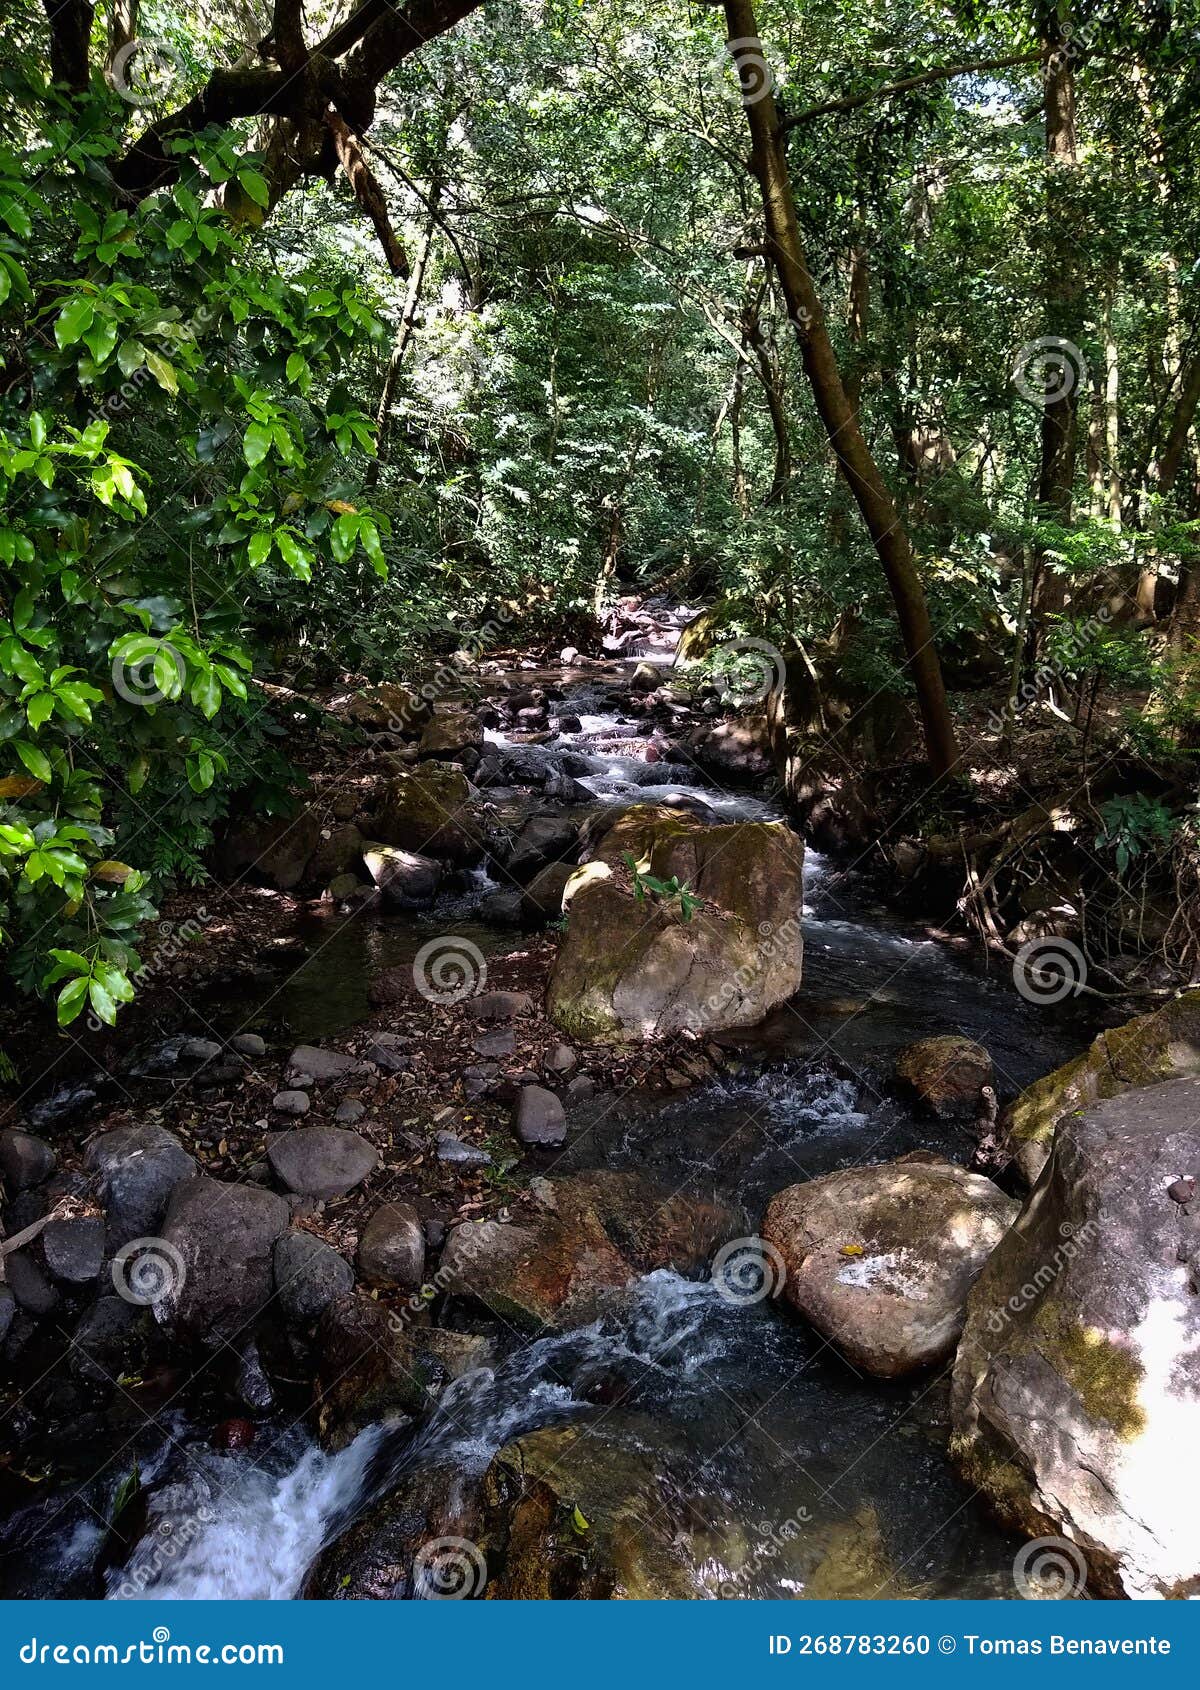 creek running through ricon de la vieja park forest